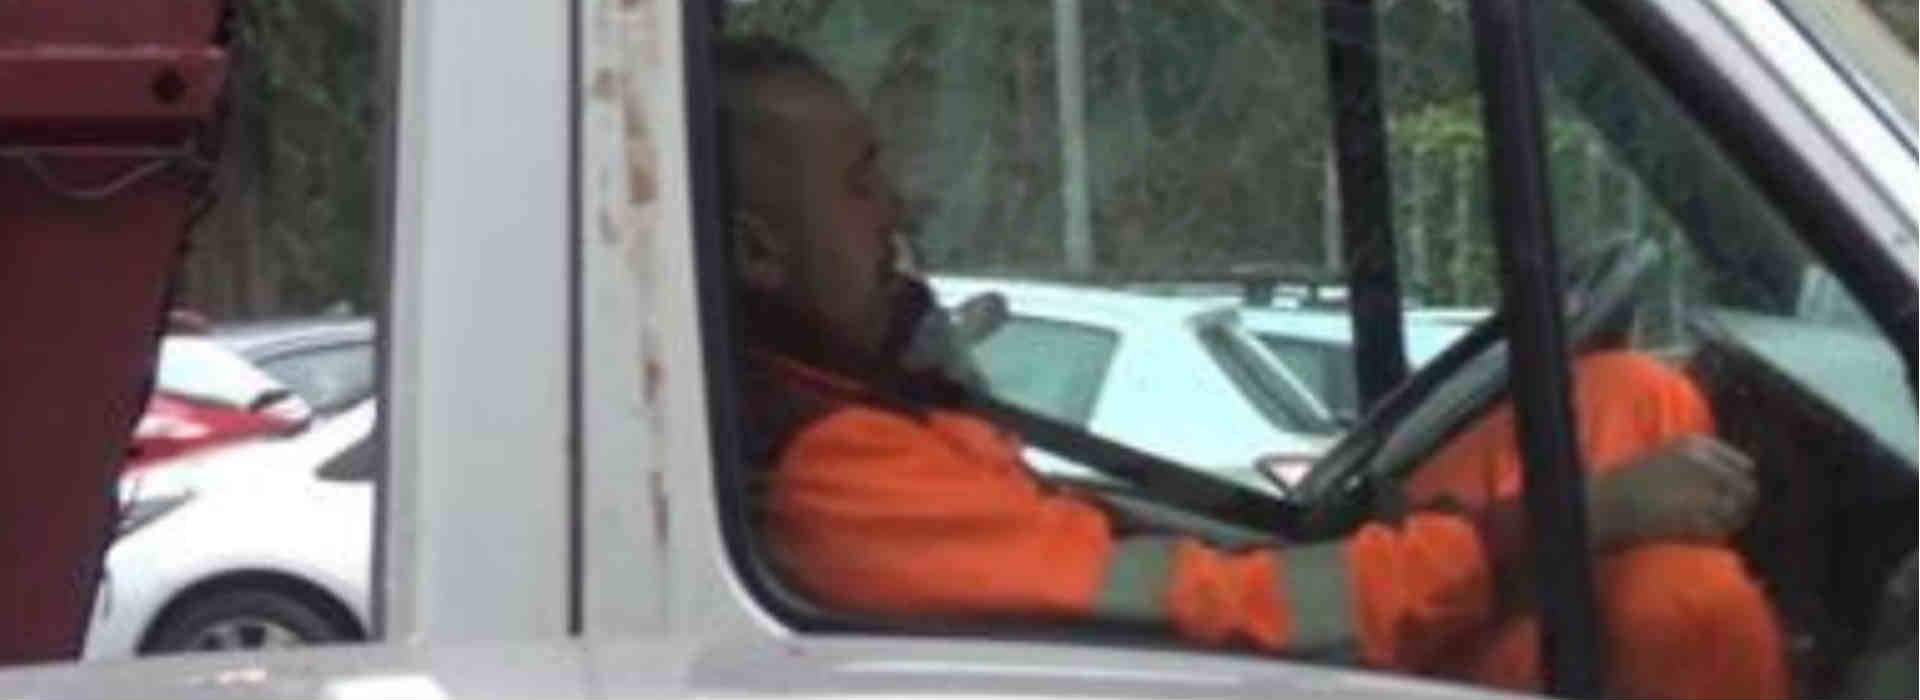 Dipendente Ama dorme nel furgone